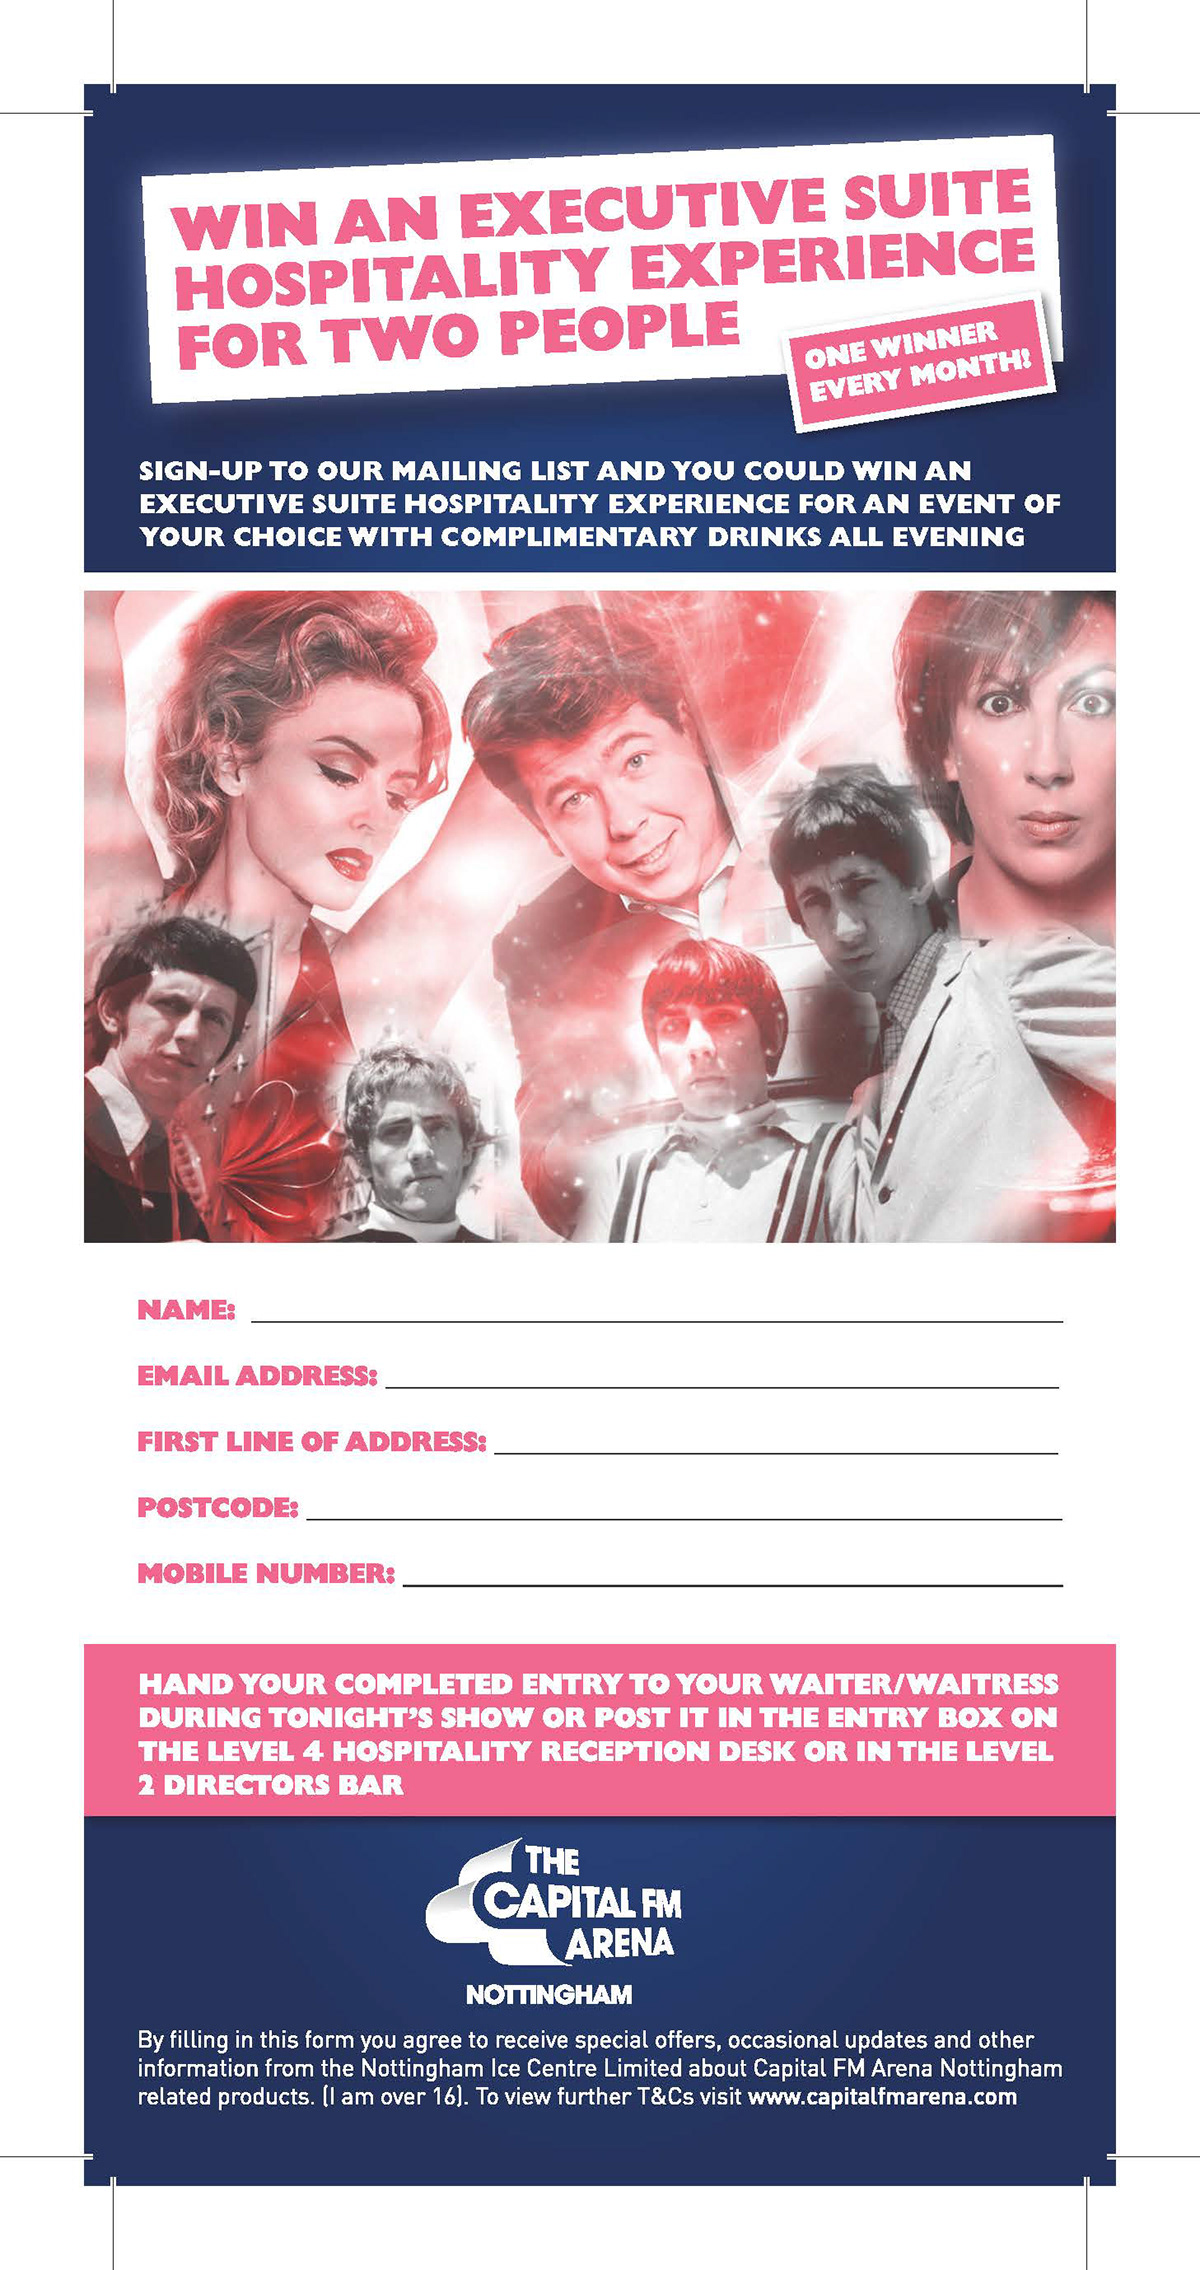 Hospitality Data Form flyer leaflet celebrities Events information capital fm arena l.a.golding